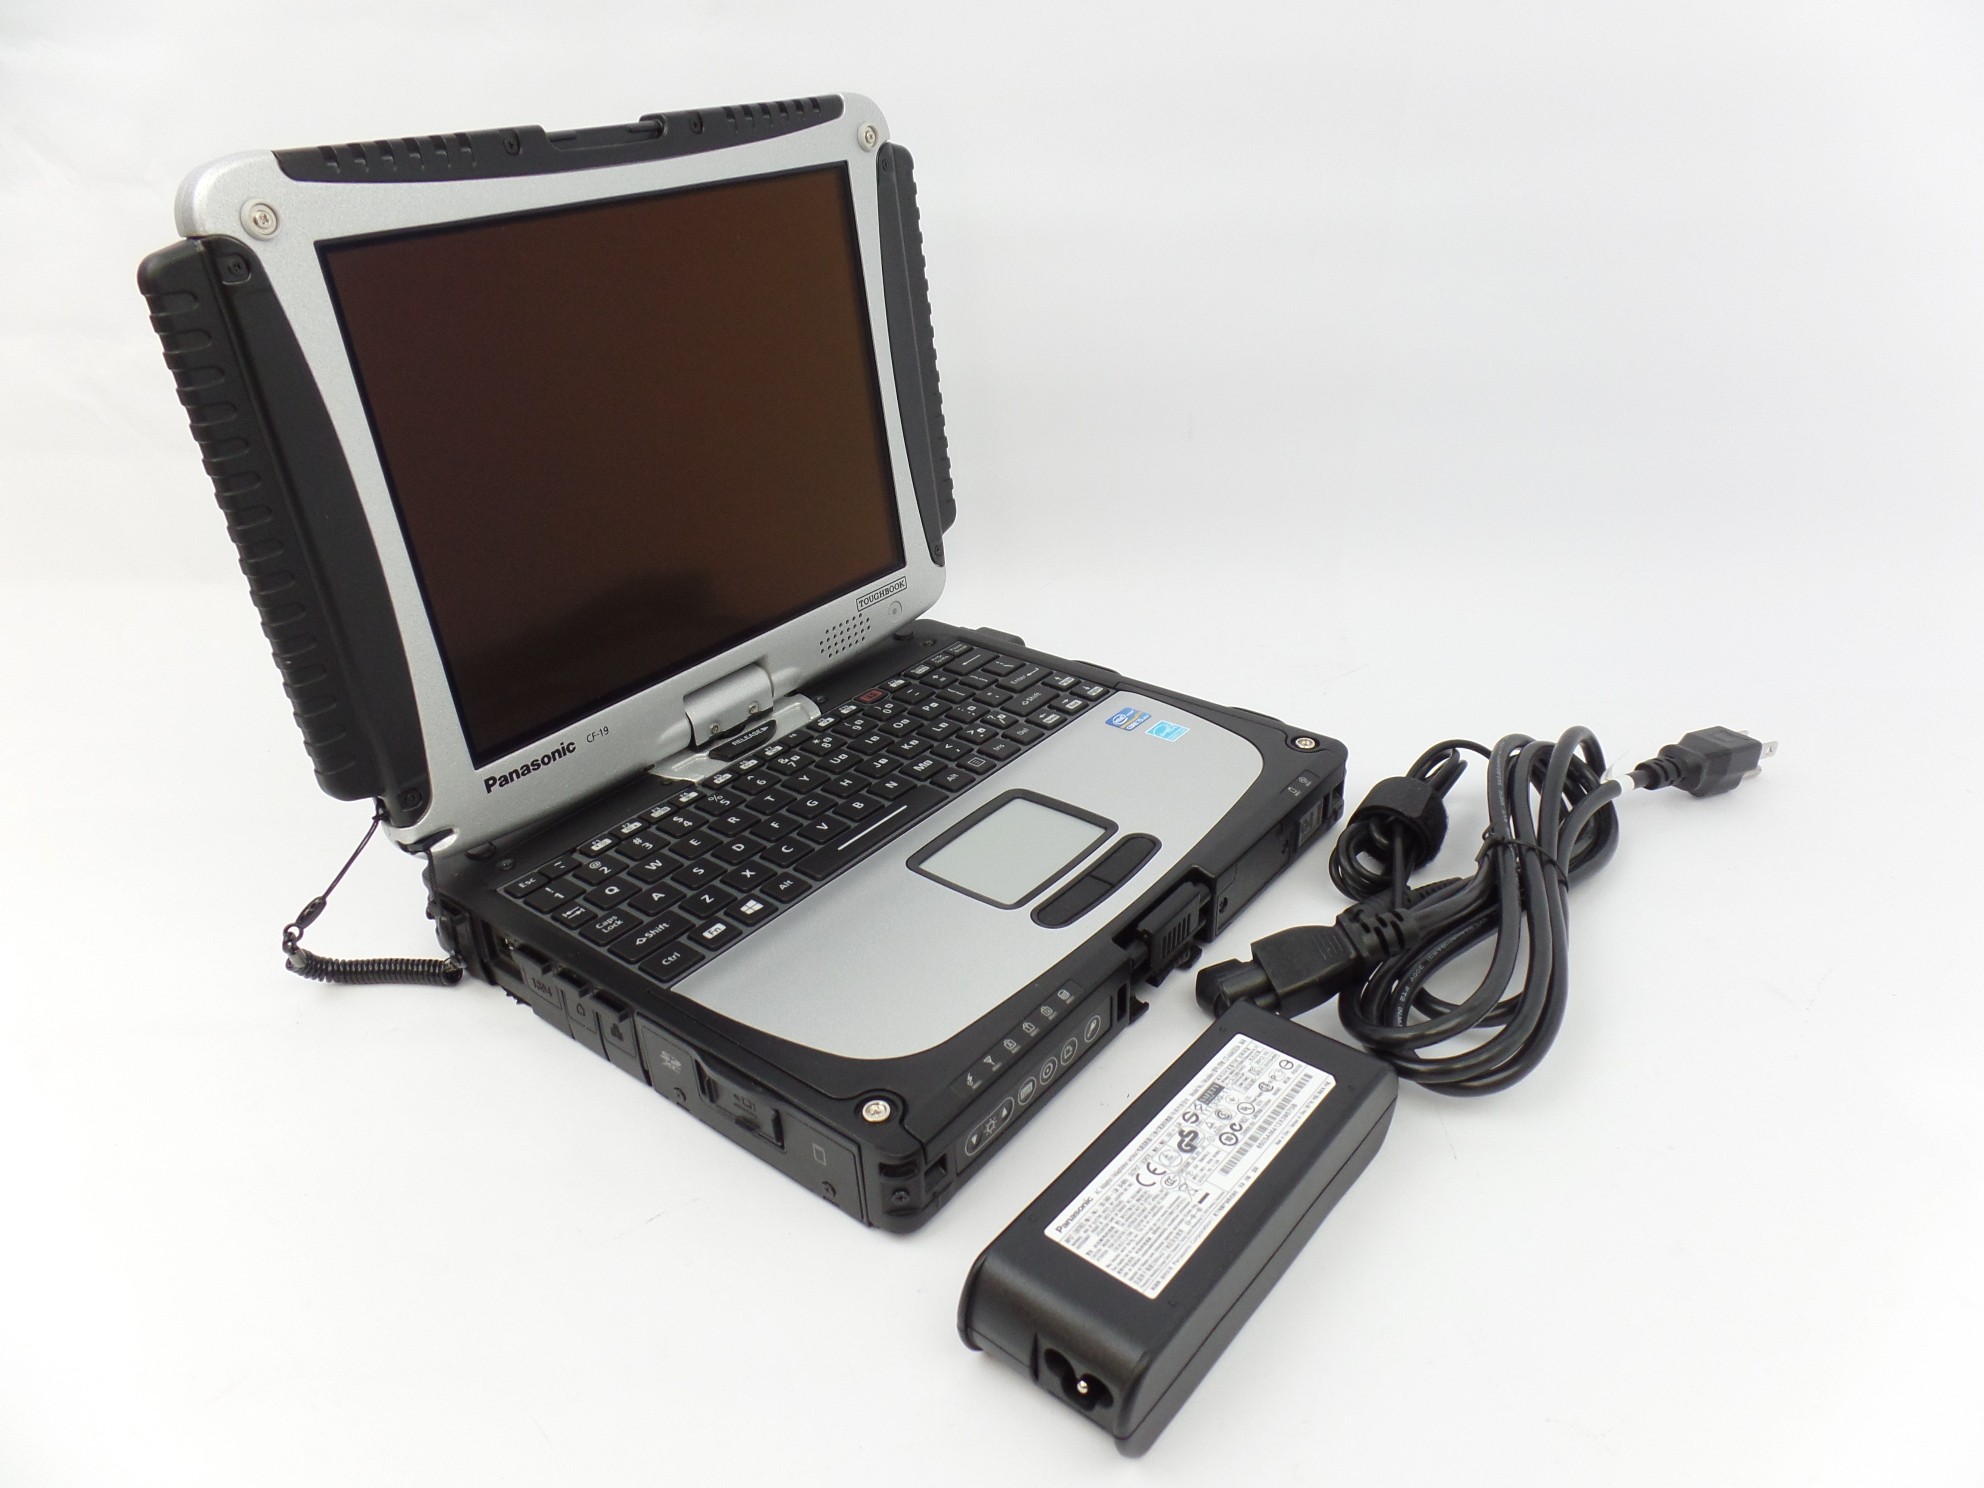 Panasonic Toughbook CF-19 10.1" XGA Touch i5-3340M 2.74GHz 4GB 500GB 4G LTE W10P